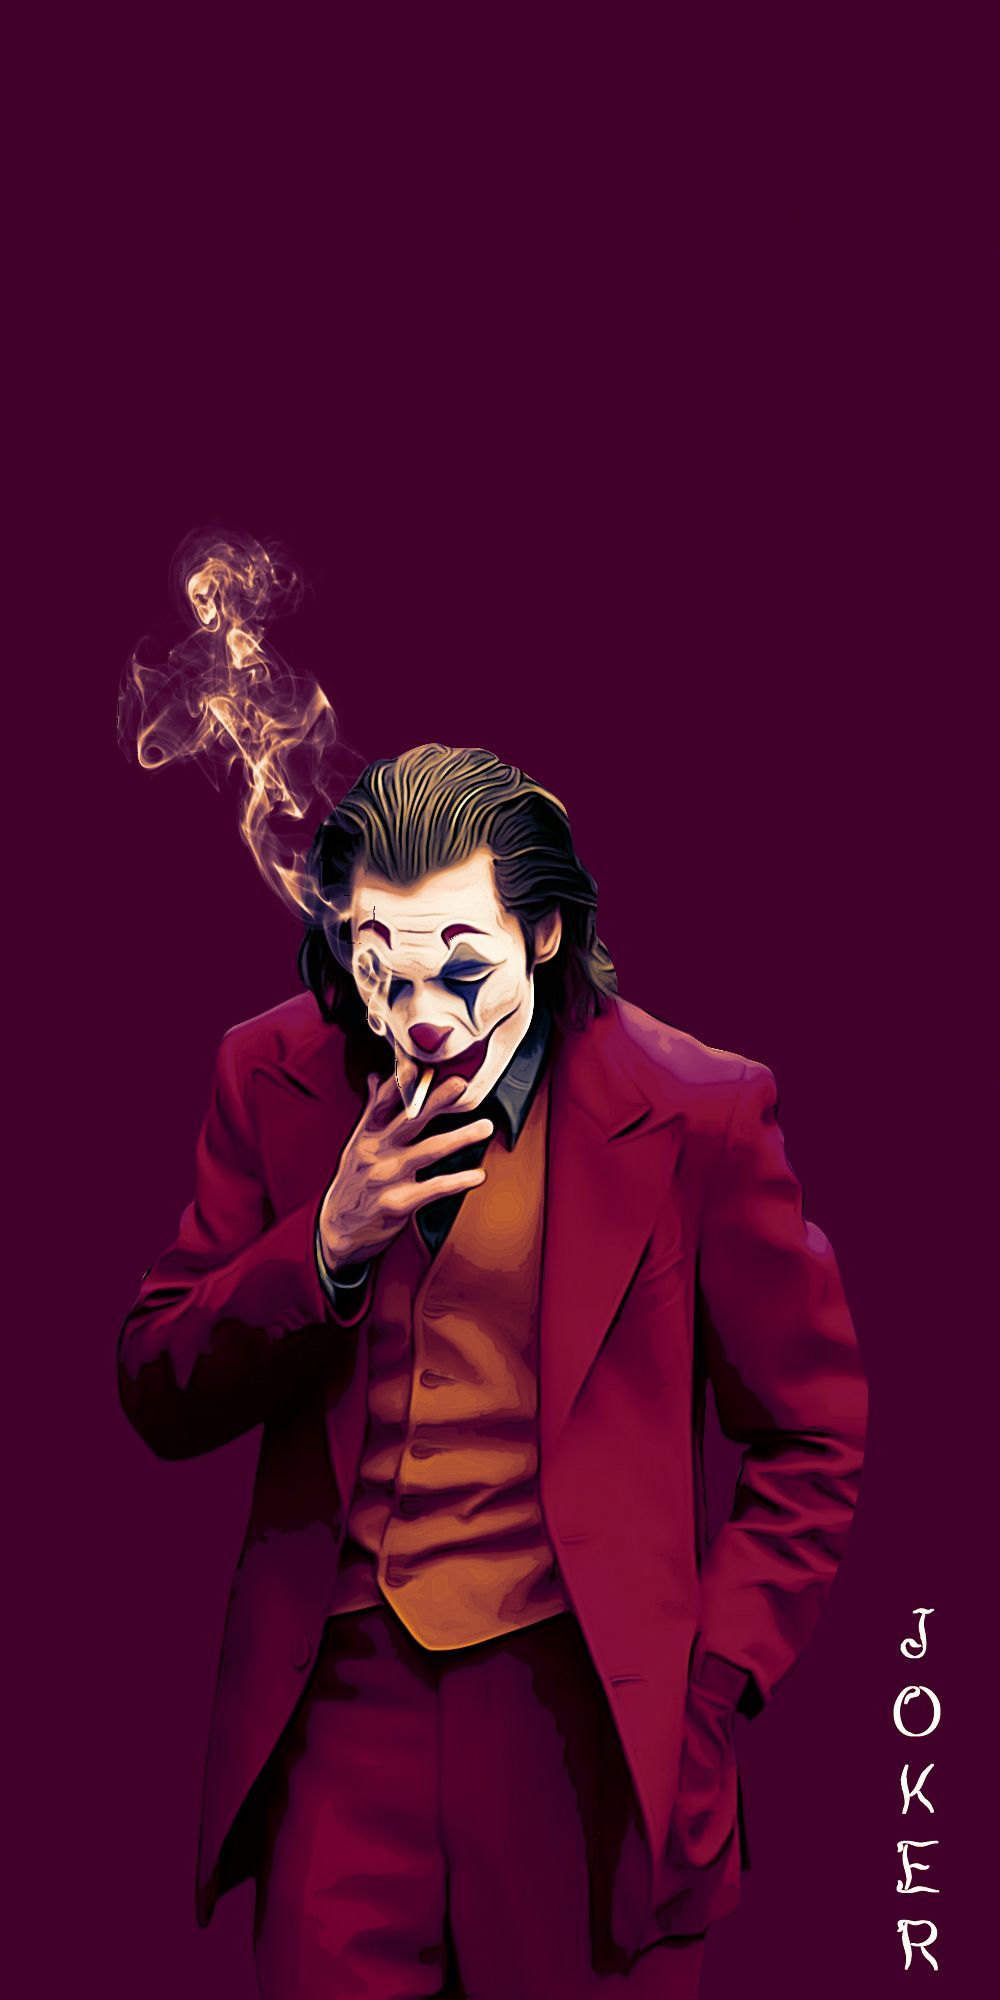 Joker mobile wallpaper #joker #joker_wallpaper #mobile_wallpaper